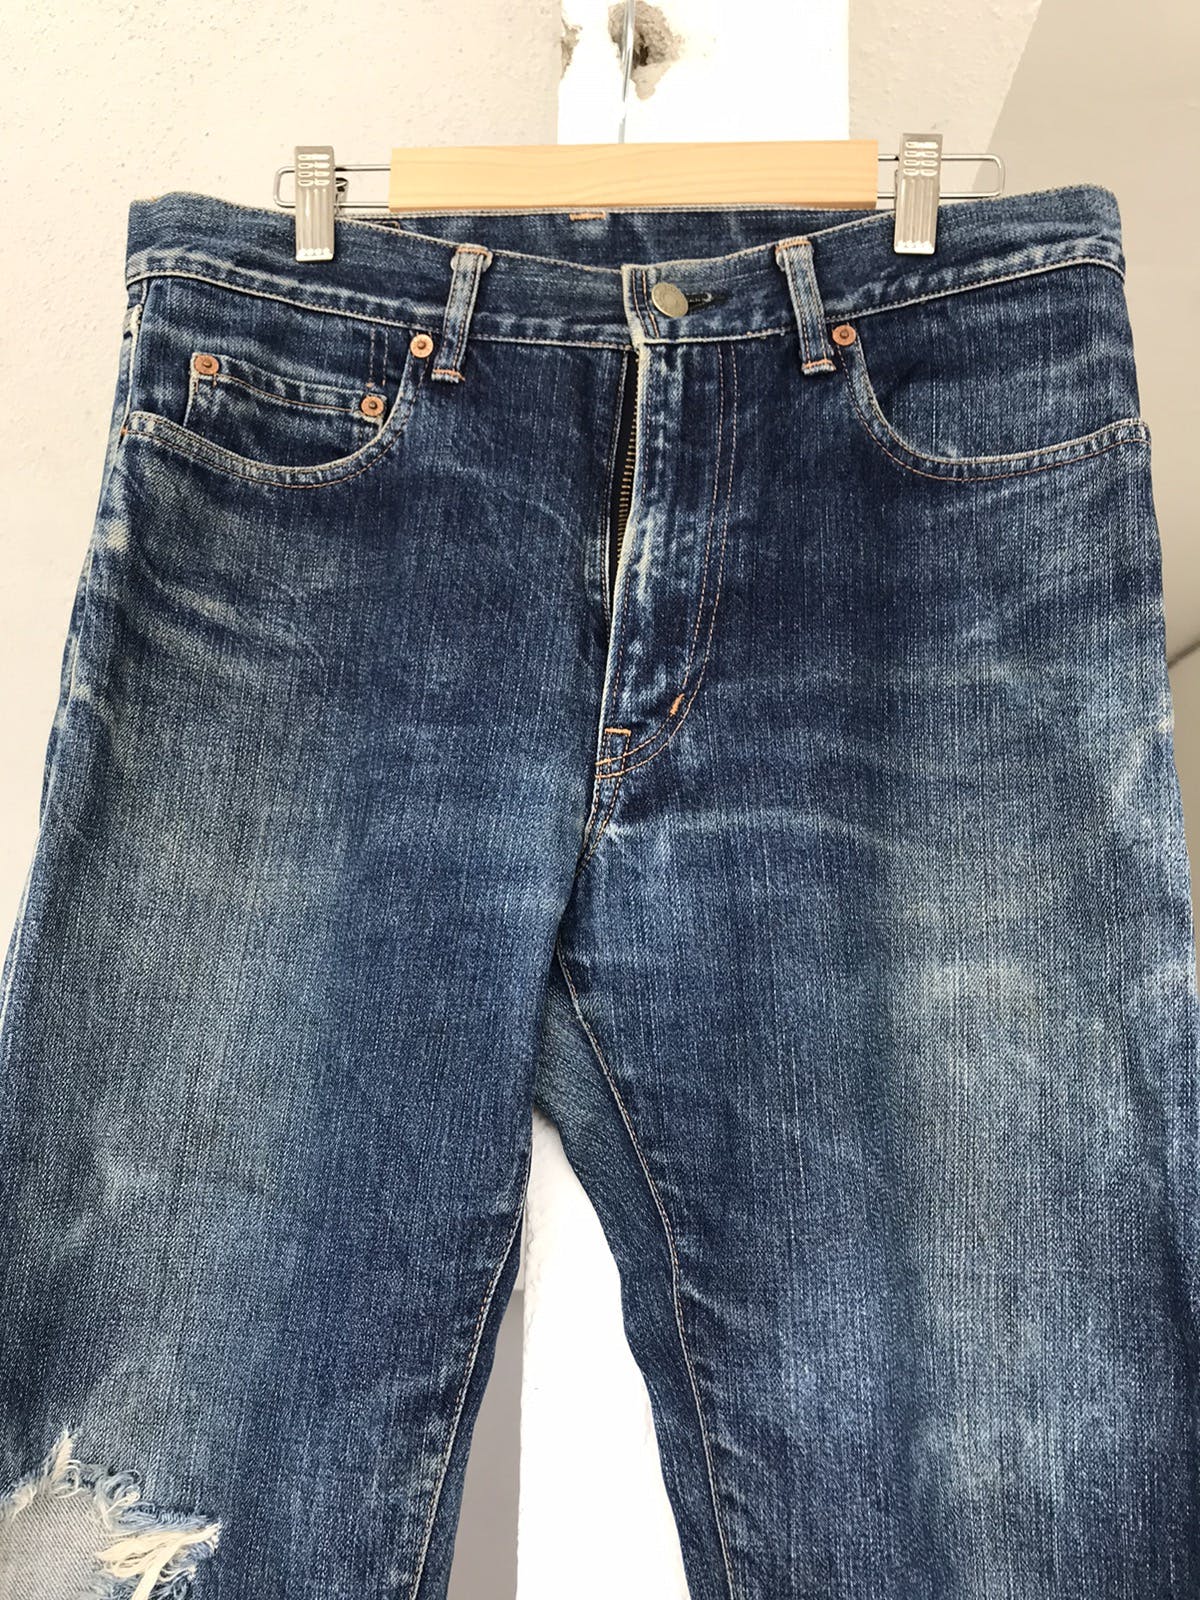 90s Hollywood Ranch Marrket Denim Jeans - 5